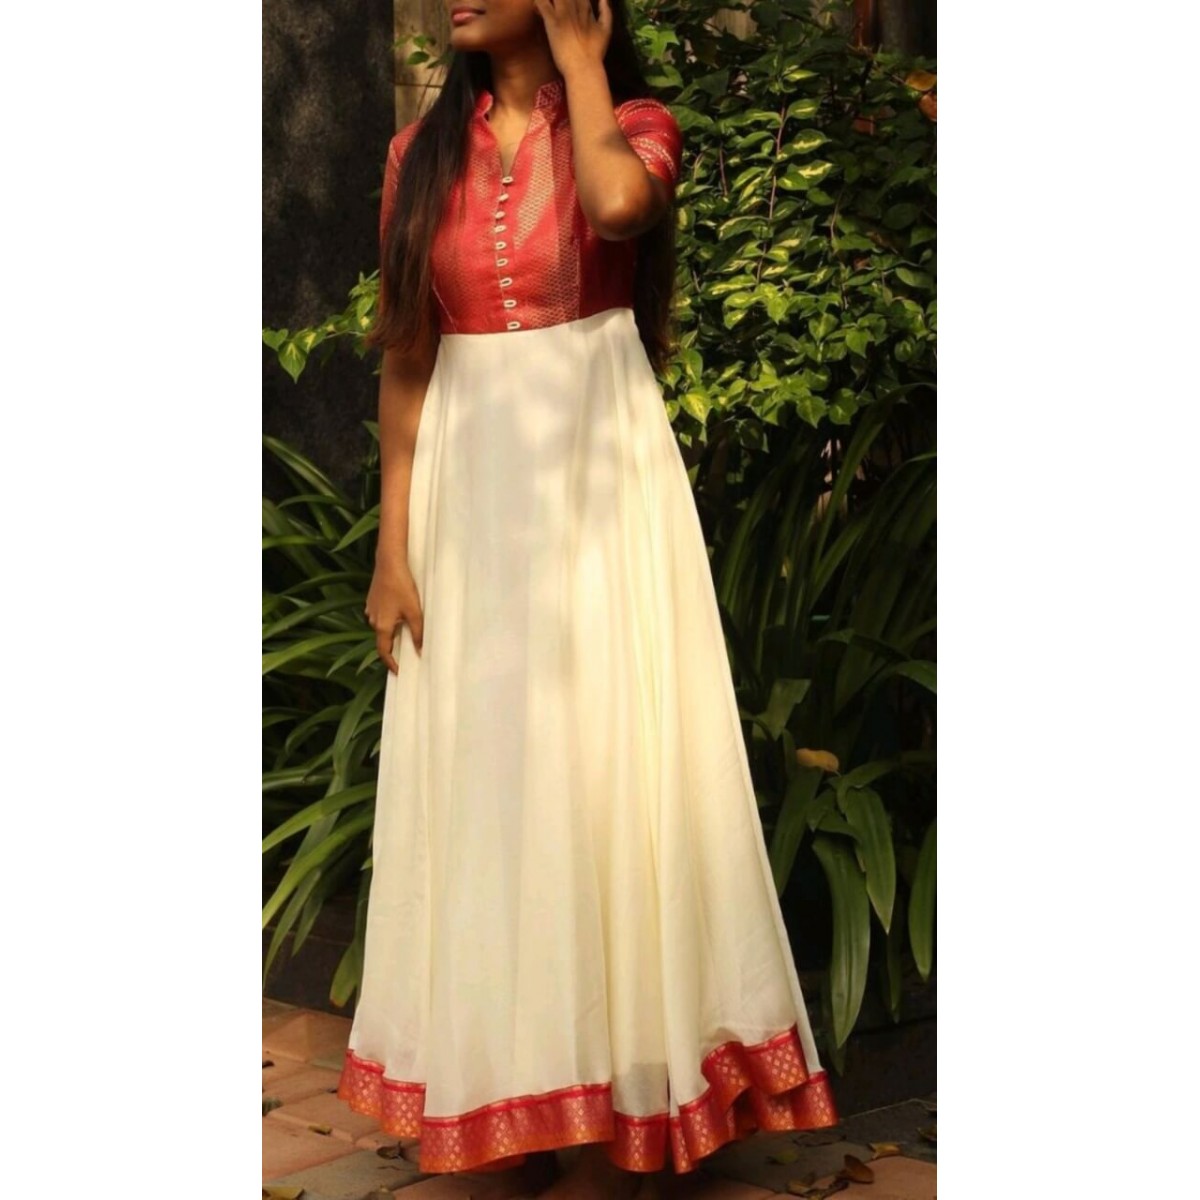 Kerala traditional engagement lehenga 2021  Brides sister dress designs   YouTube